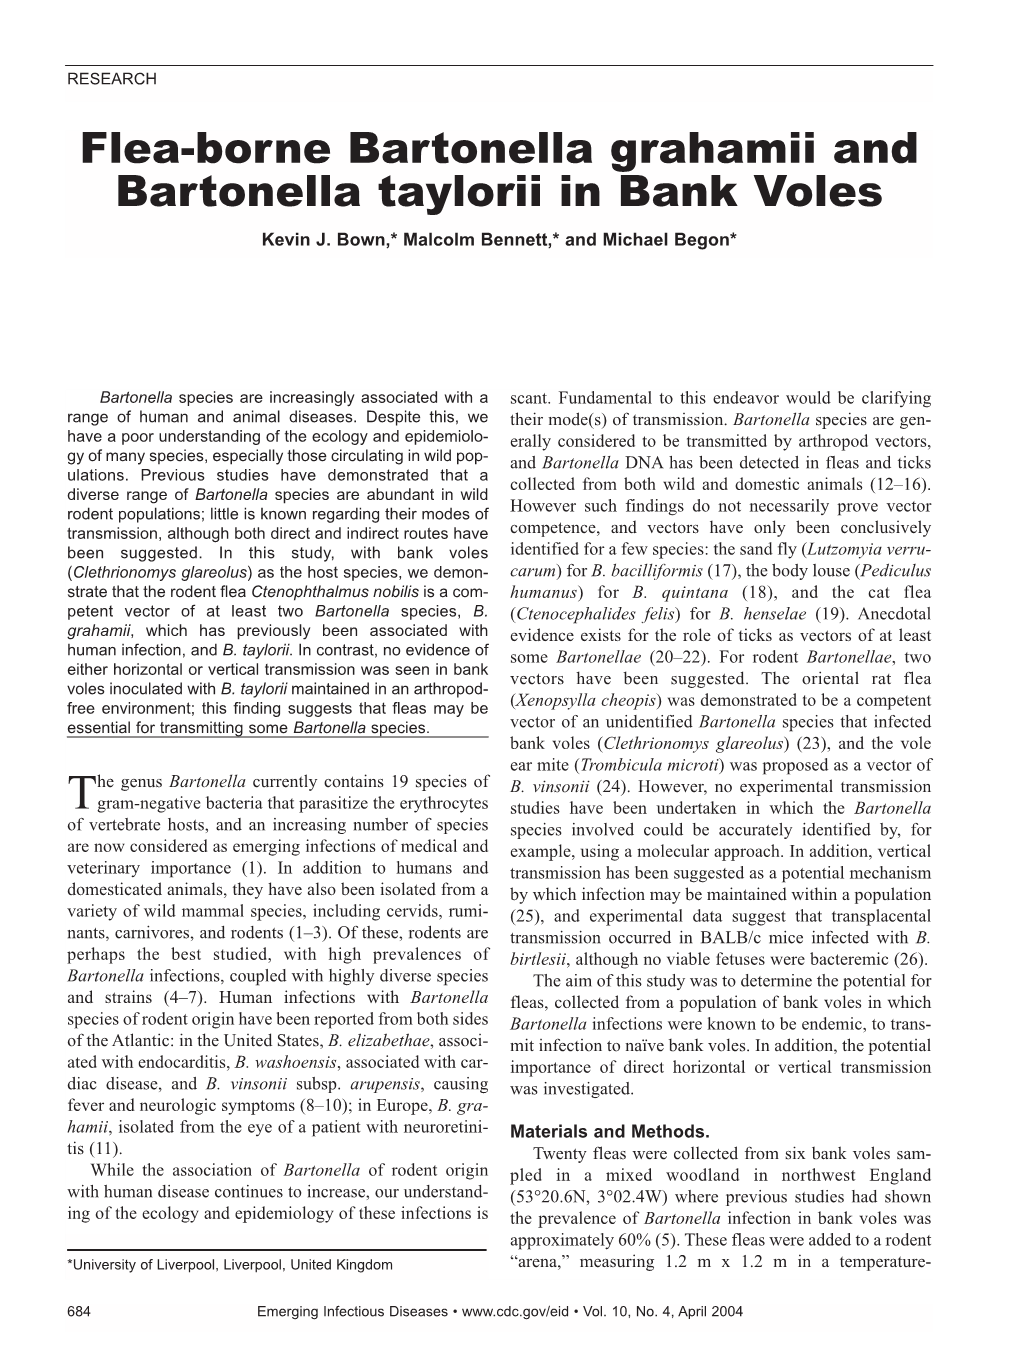 Flea-Borne Bartonella Grahamii and Bartonella Taylorii in Bank Voles Kevin J